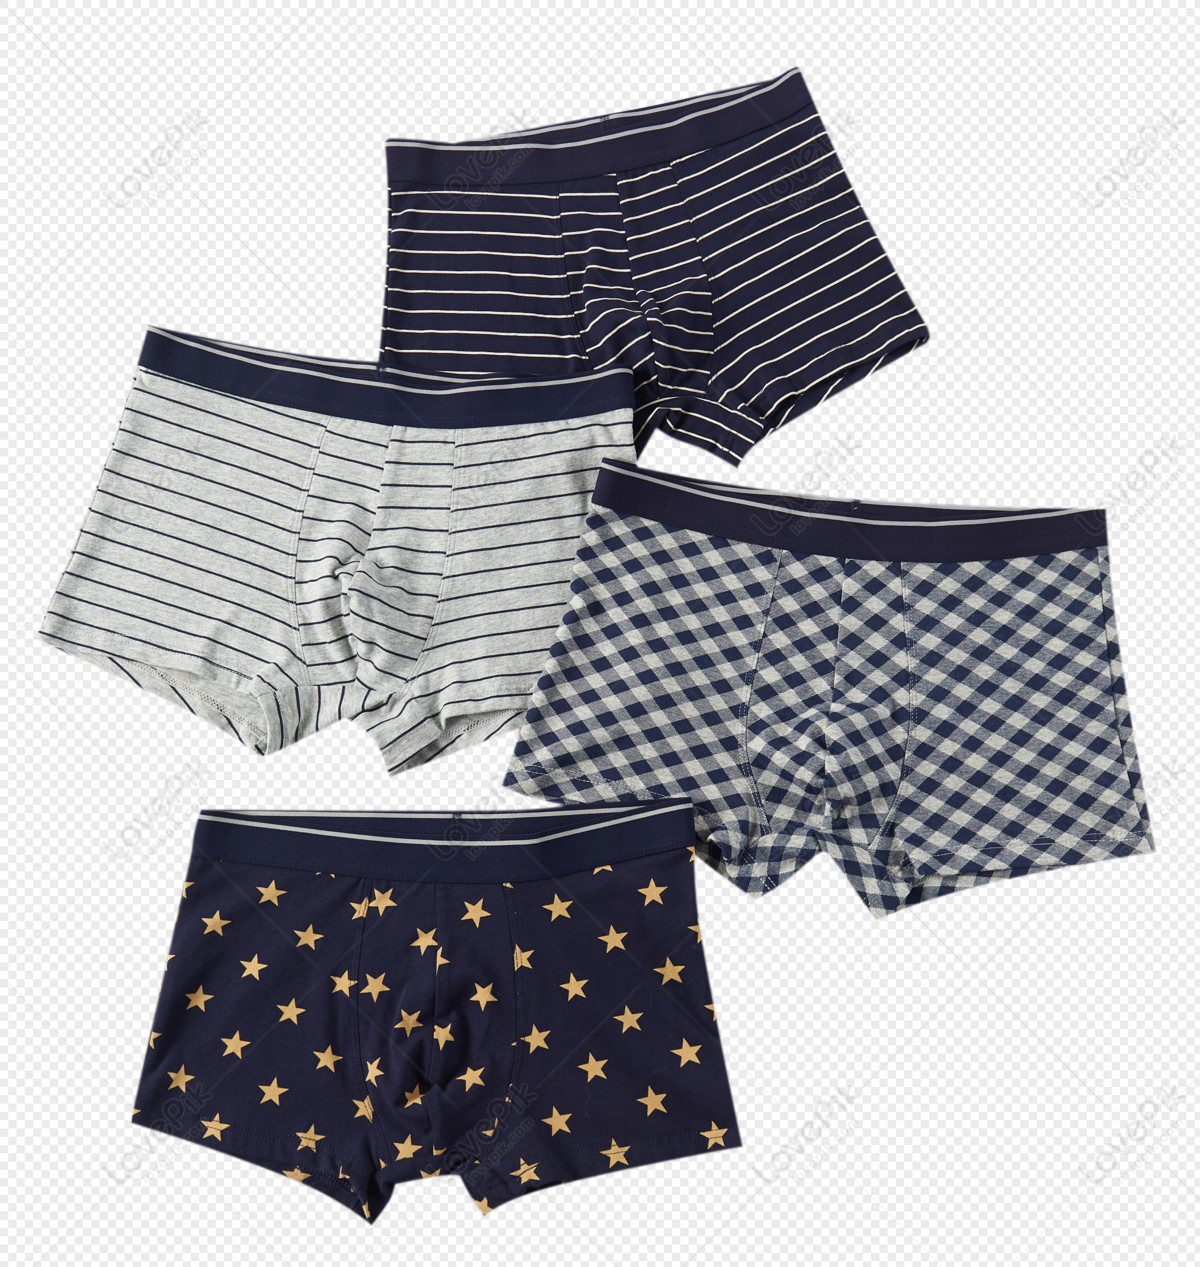 Mens Underwear, Men Underwear, Panties Men, Flat PNG Image Free Download  And Clipart Image For Free Download - Lovepik